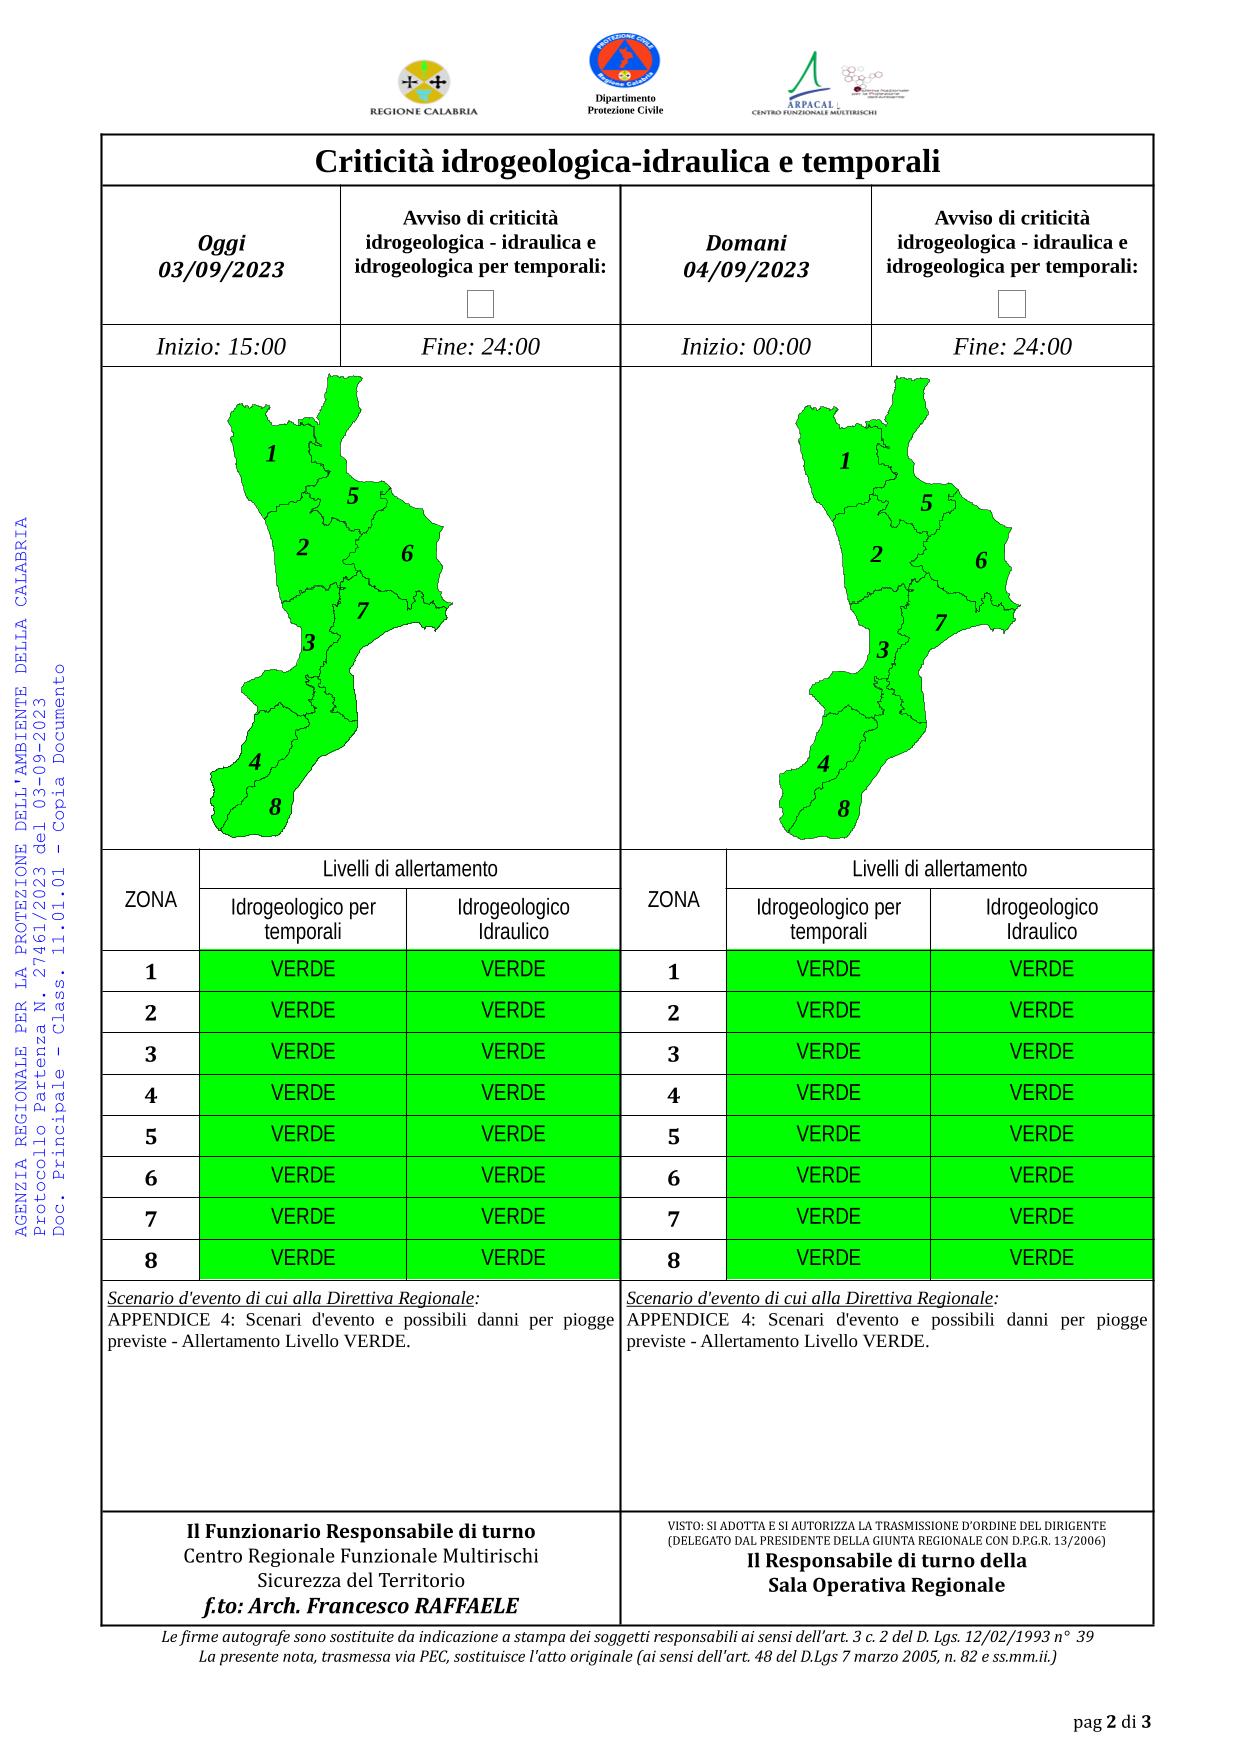 Criticità idrogeologica-idraulica e temporali in Calabria 03-09-2023